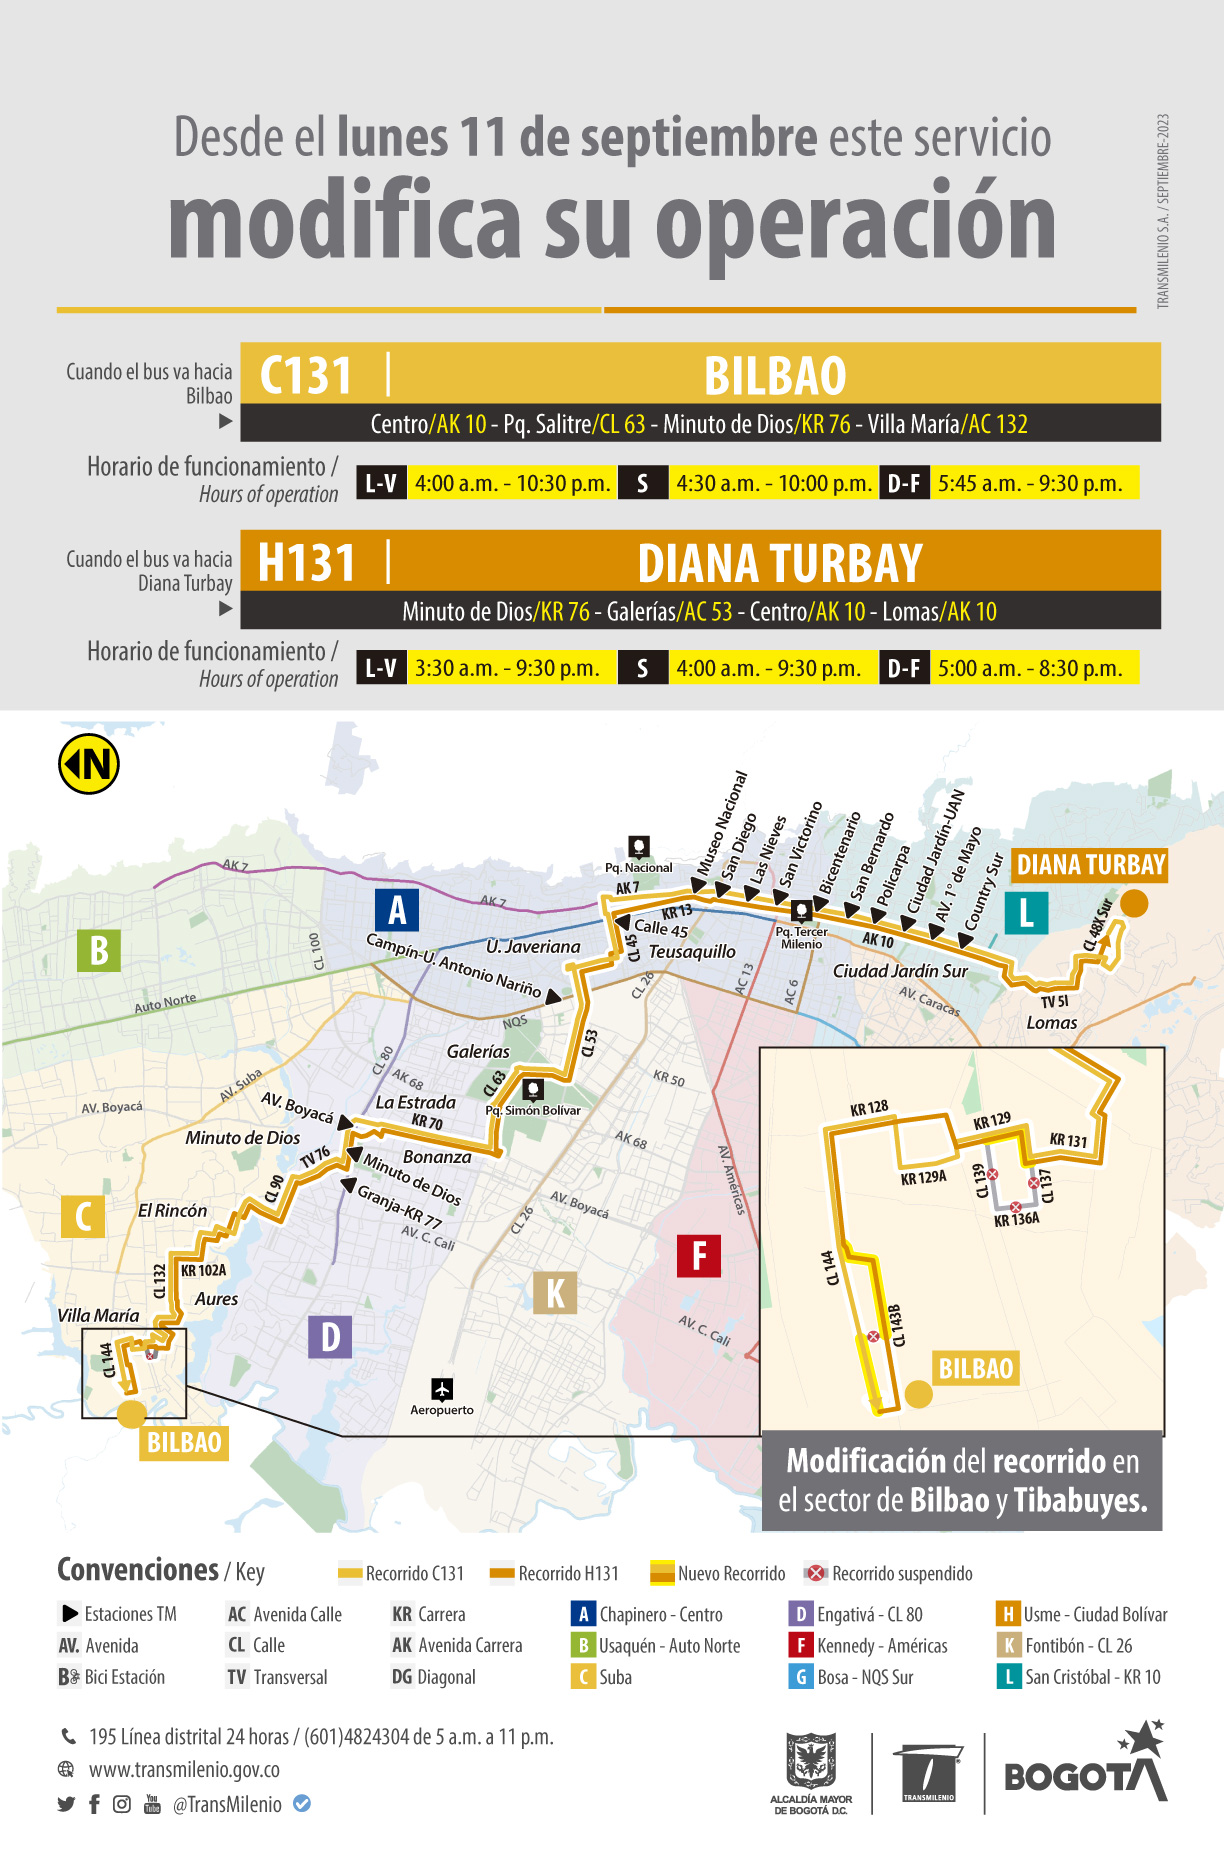 Ruta zonal C131 Bilbao - H131 Diana Turbay modifica su operación